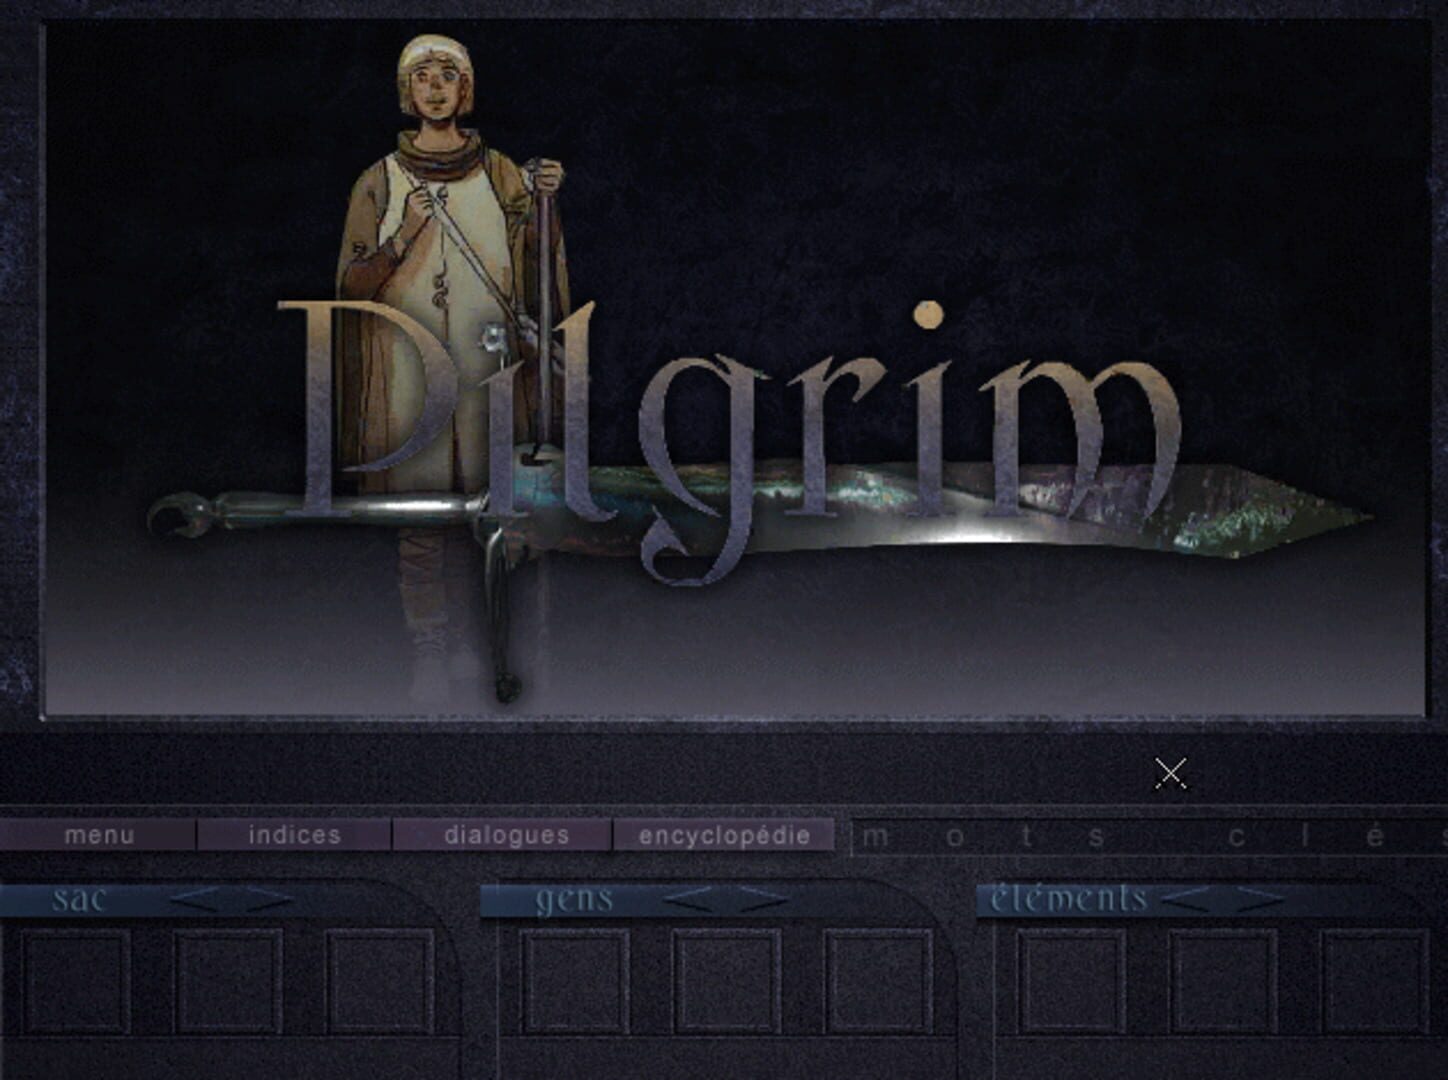 Pilgrims screenshots